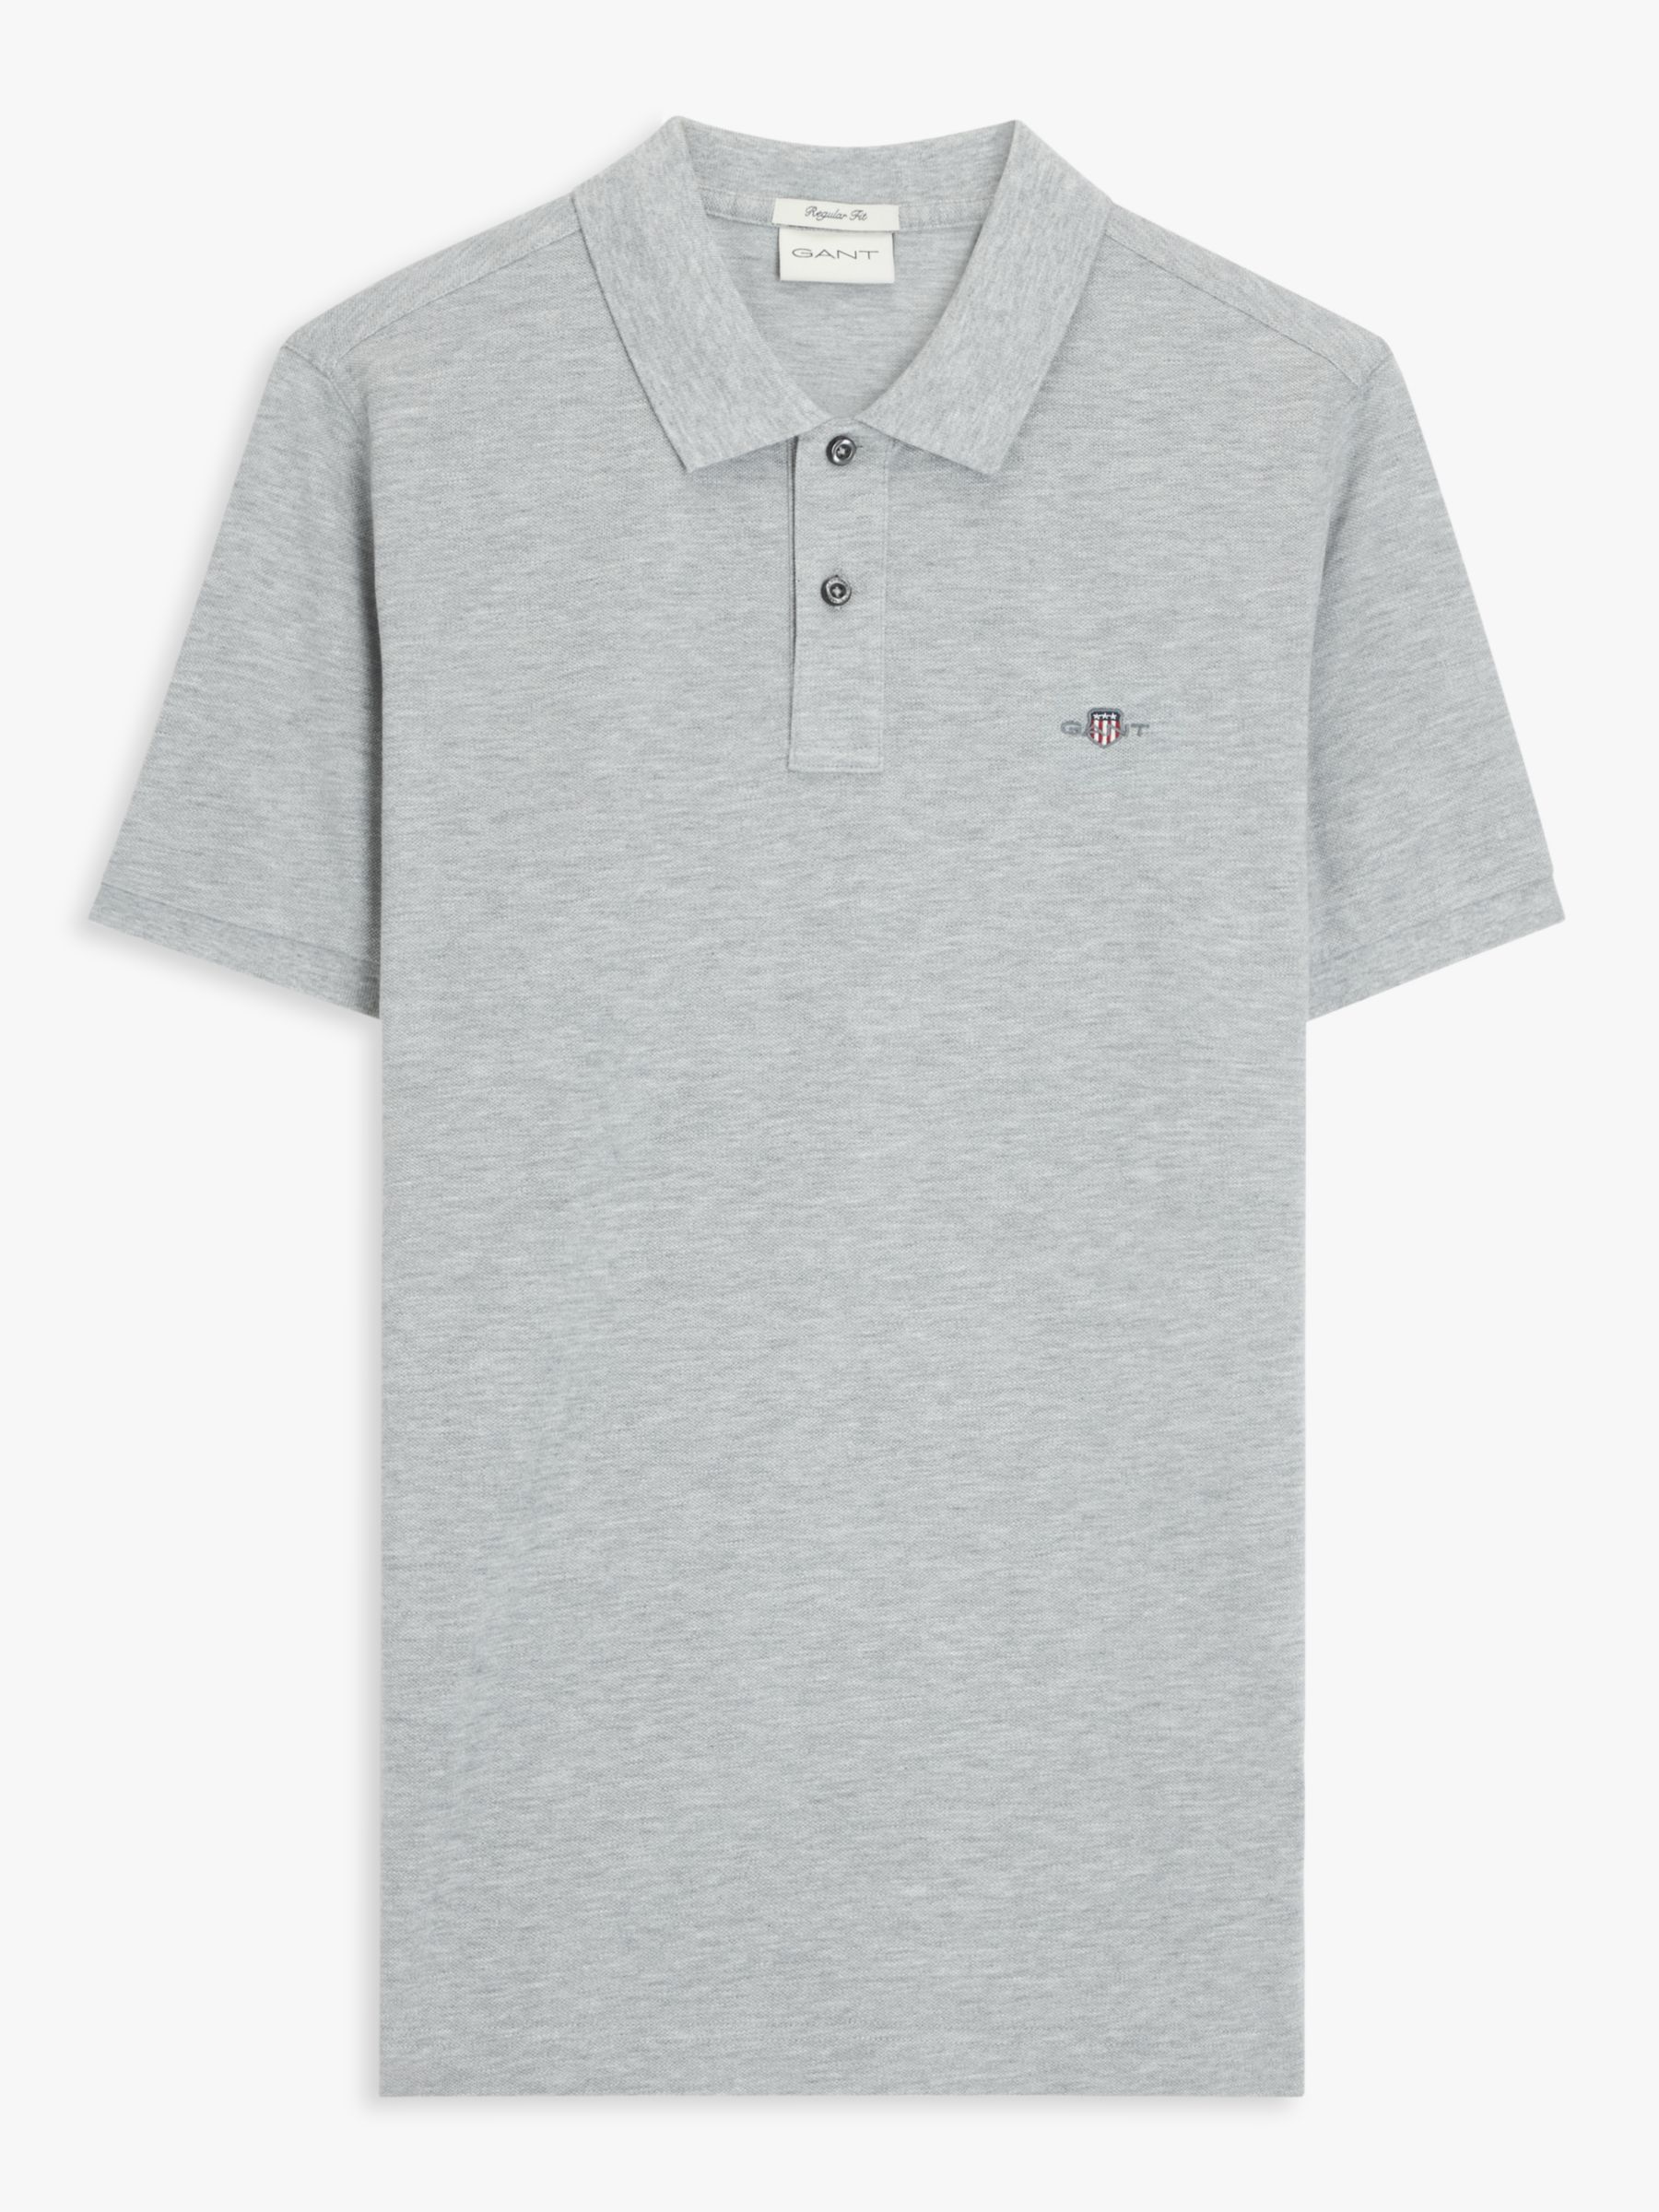 GANT Piqué Shield Short Sleeve Regular Fit Polo Shirt, Grey Melange, S